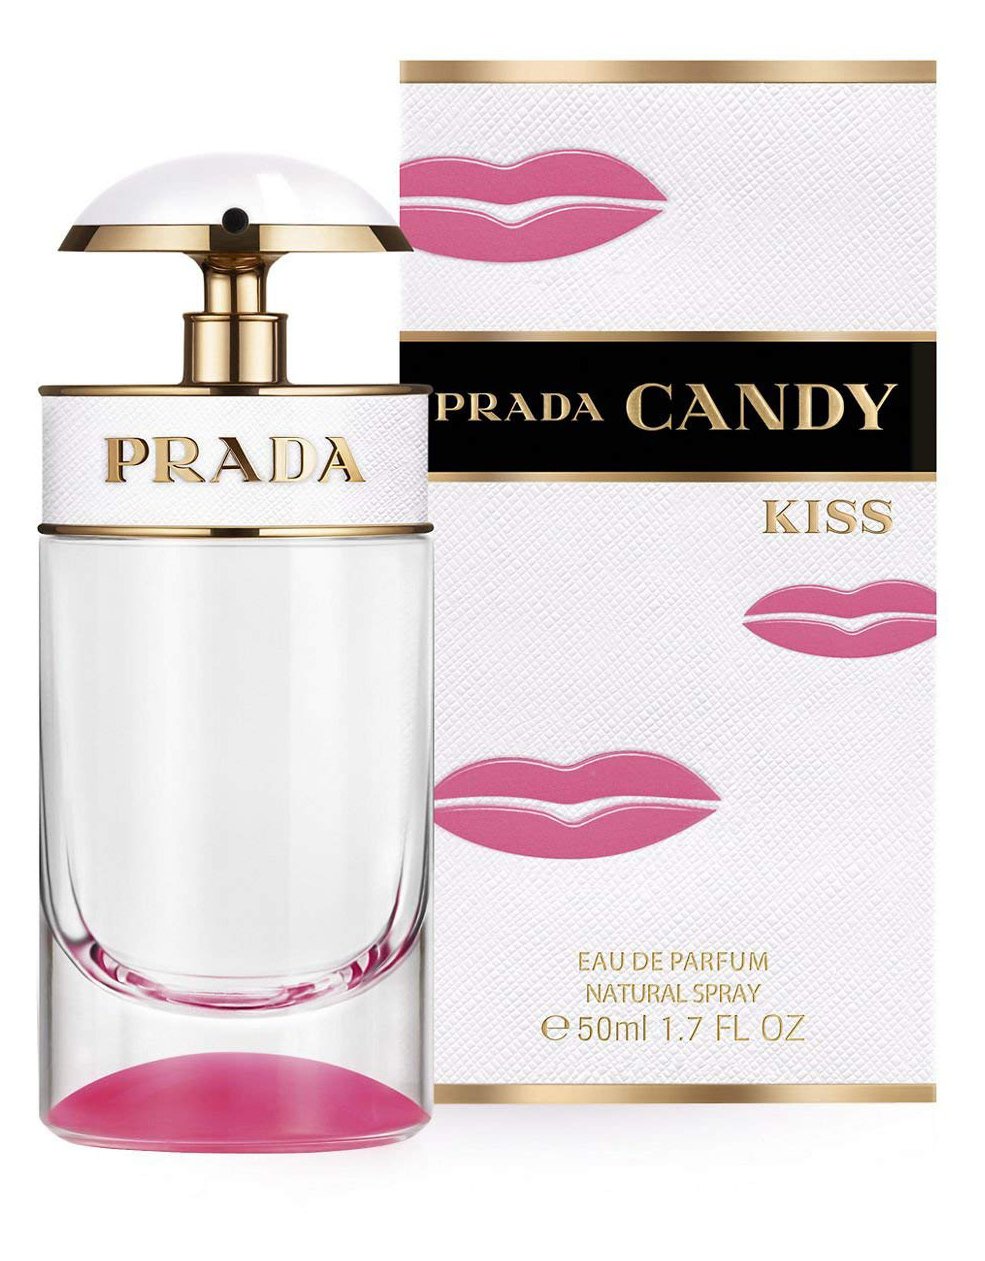 prada candy kiss notes